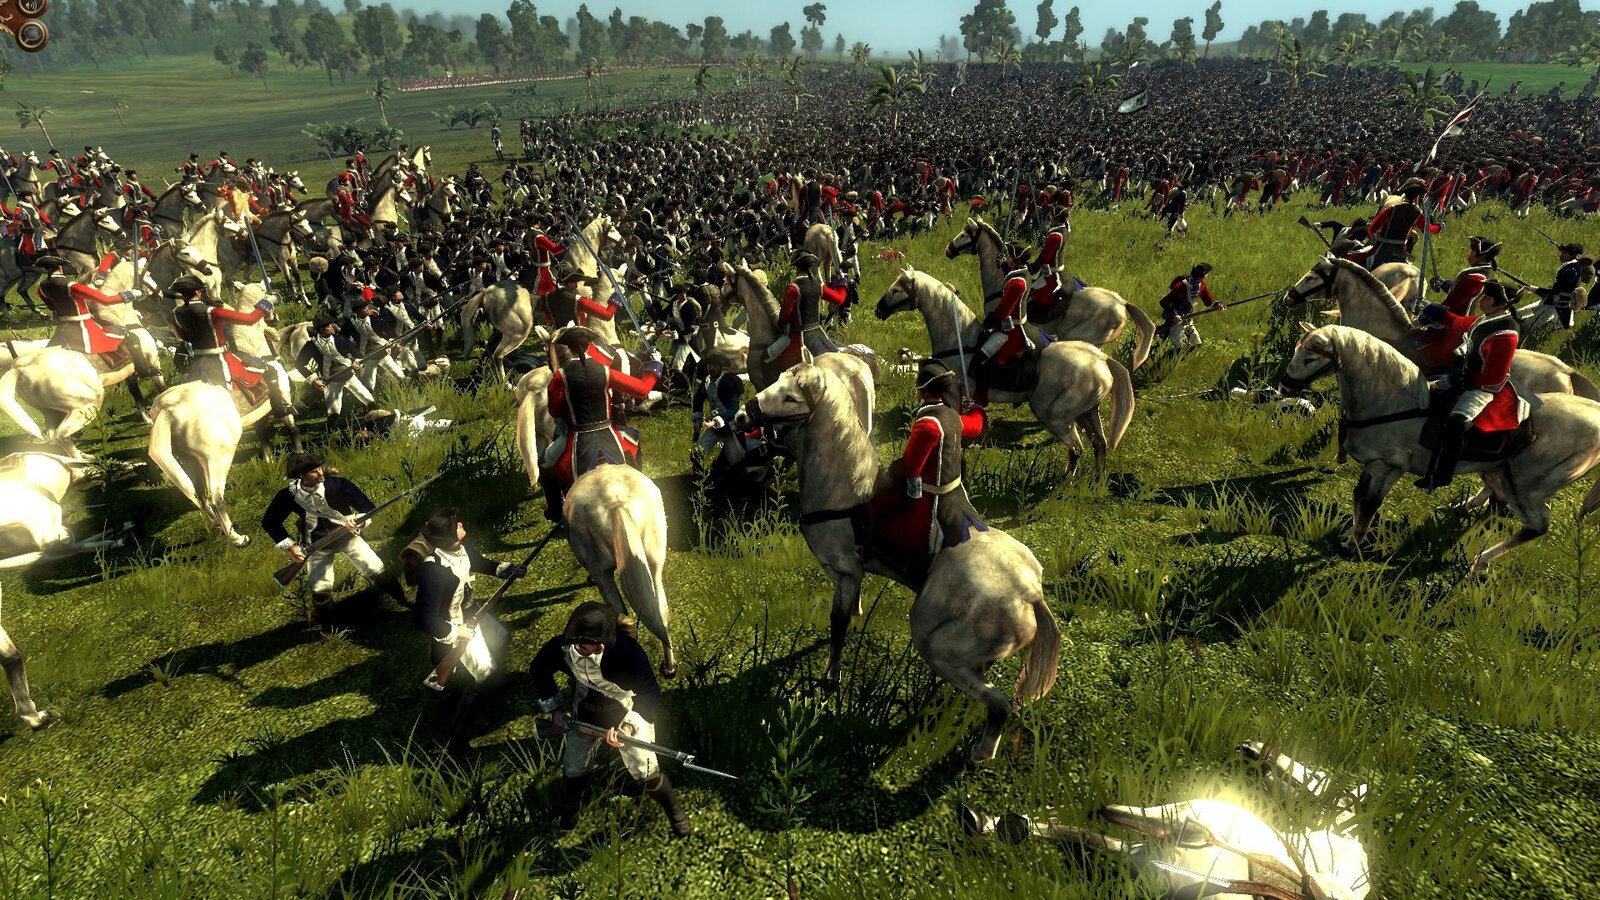 Total War: Empire - Definitive Edition